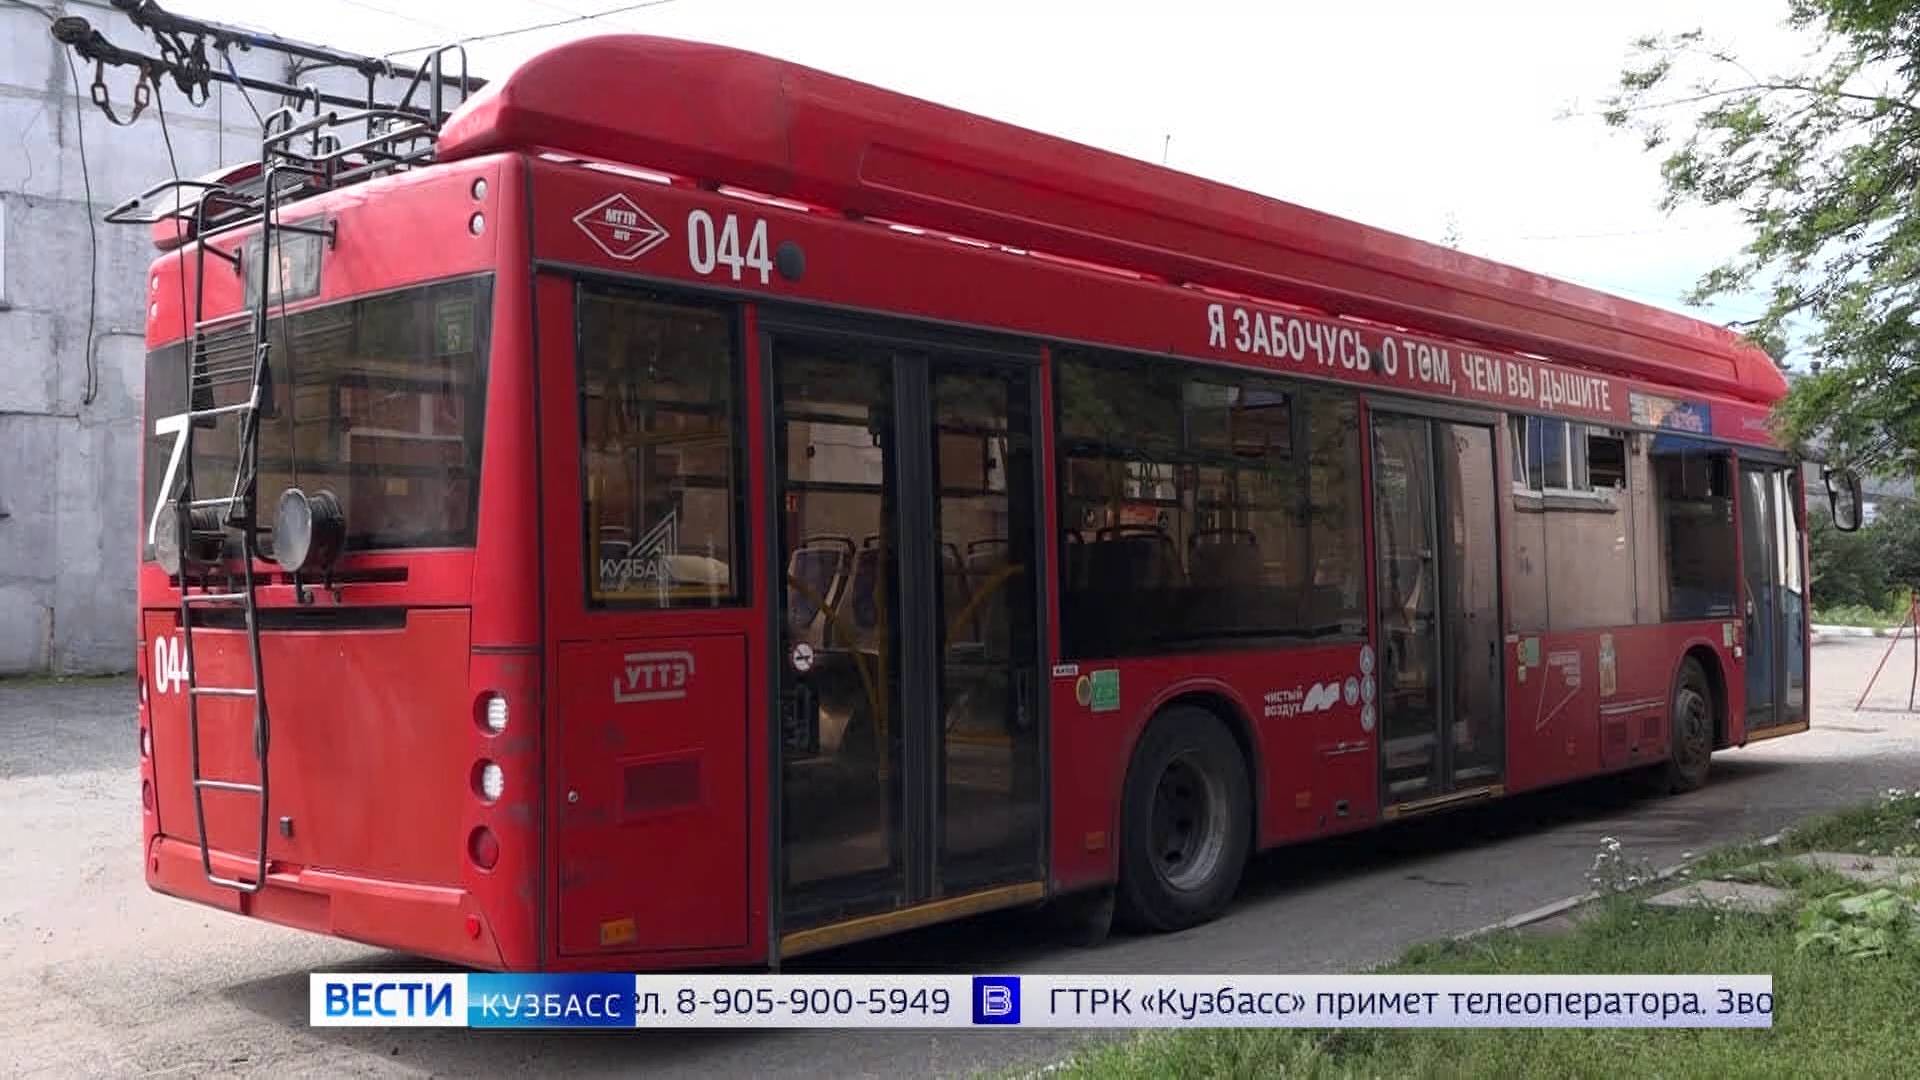 С 1 августа в Новокузнецке запускают новый троллейбусный маршрут №1А